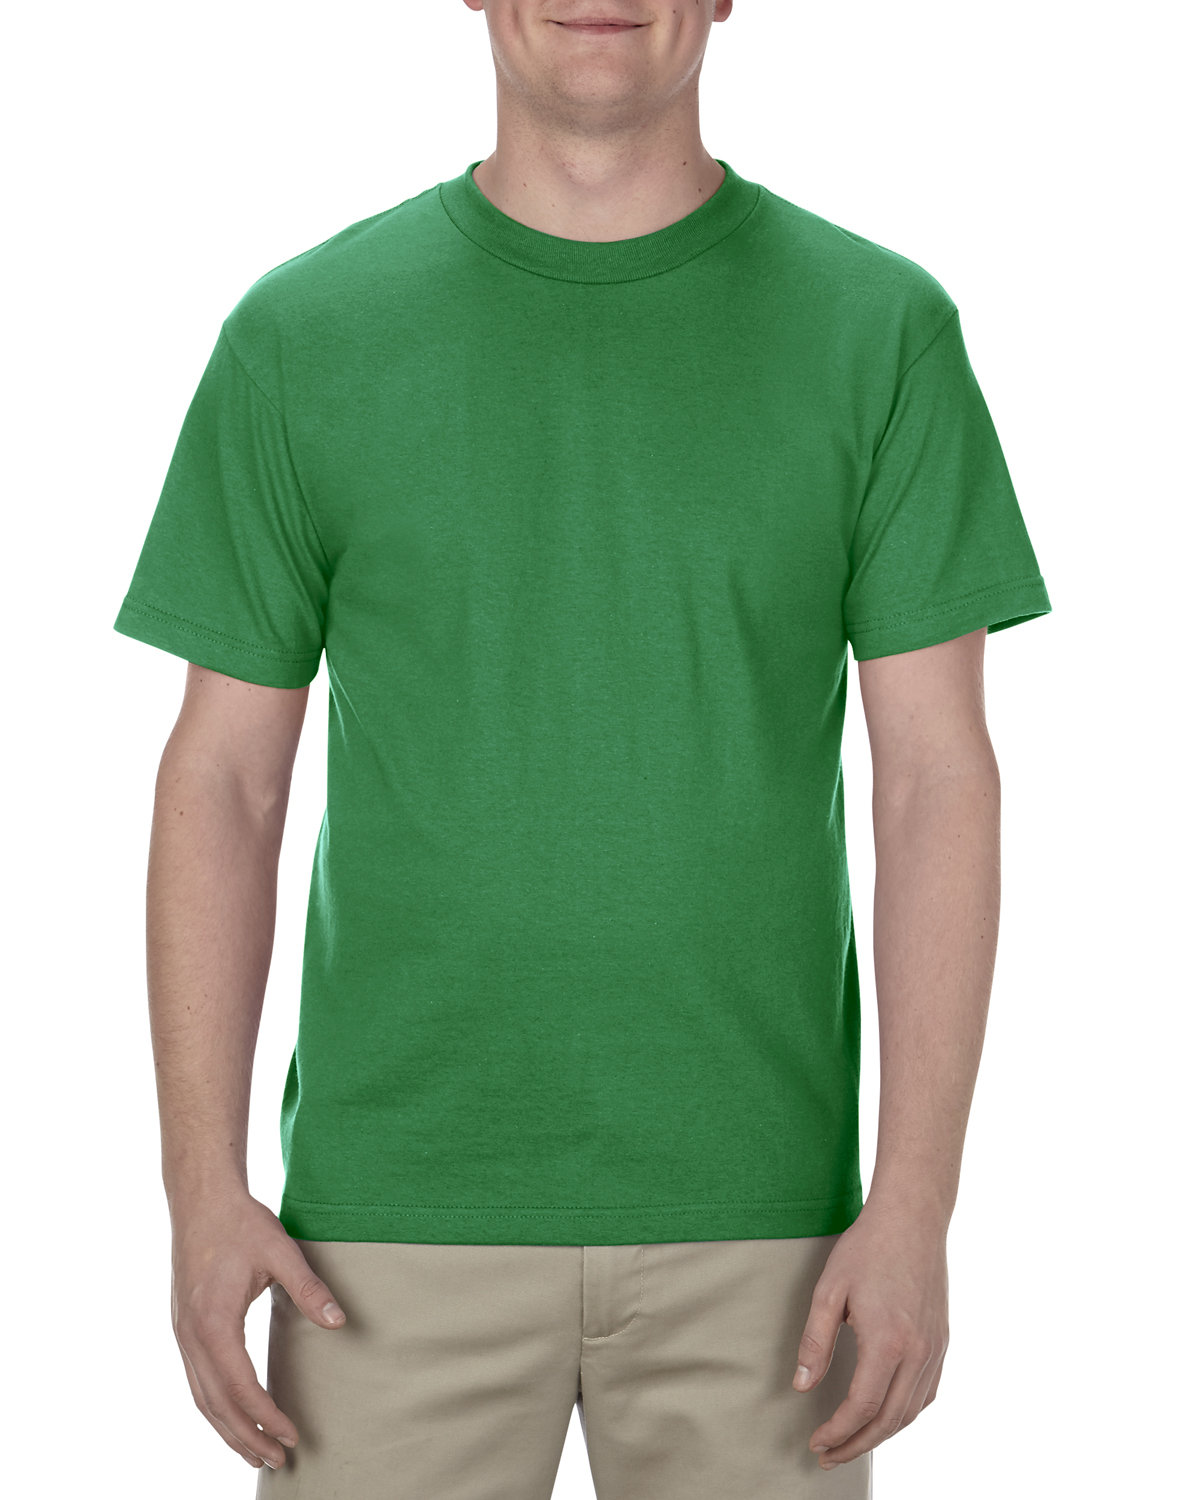 American Apparel Adult 6.0 oz., 100% Cotton T-Shirt KELLY 